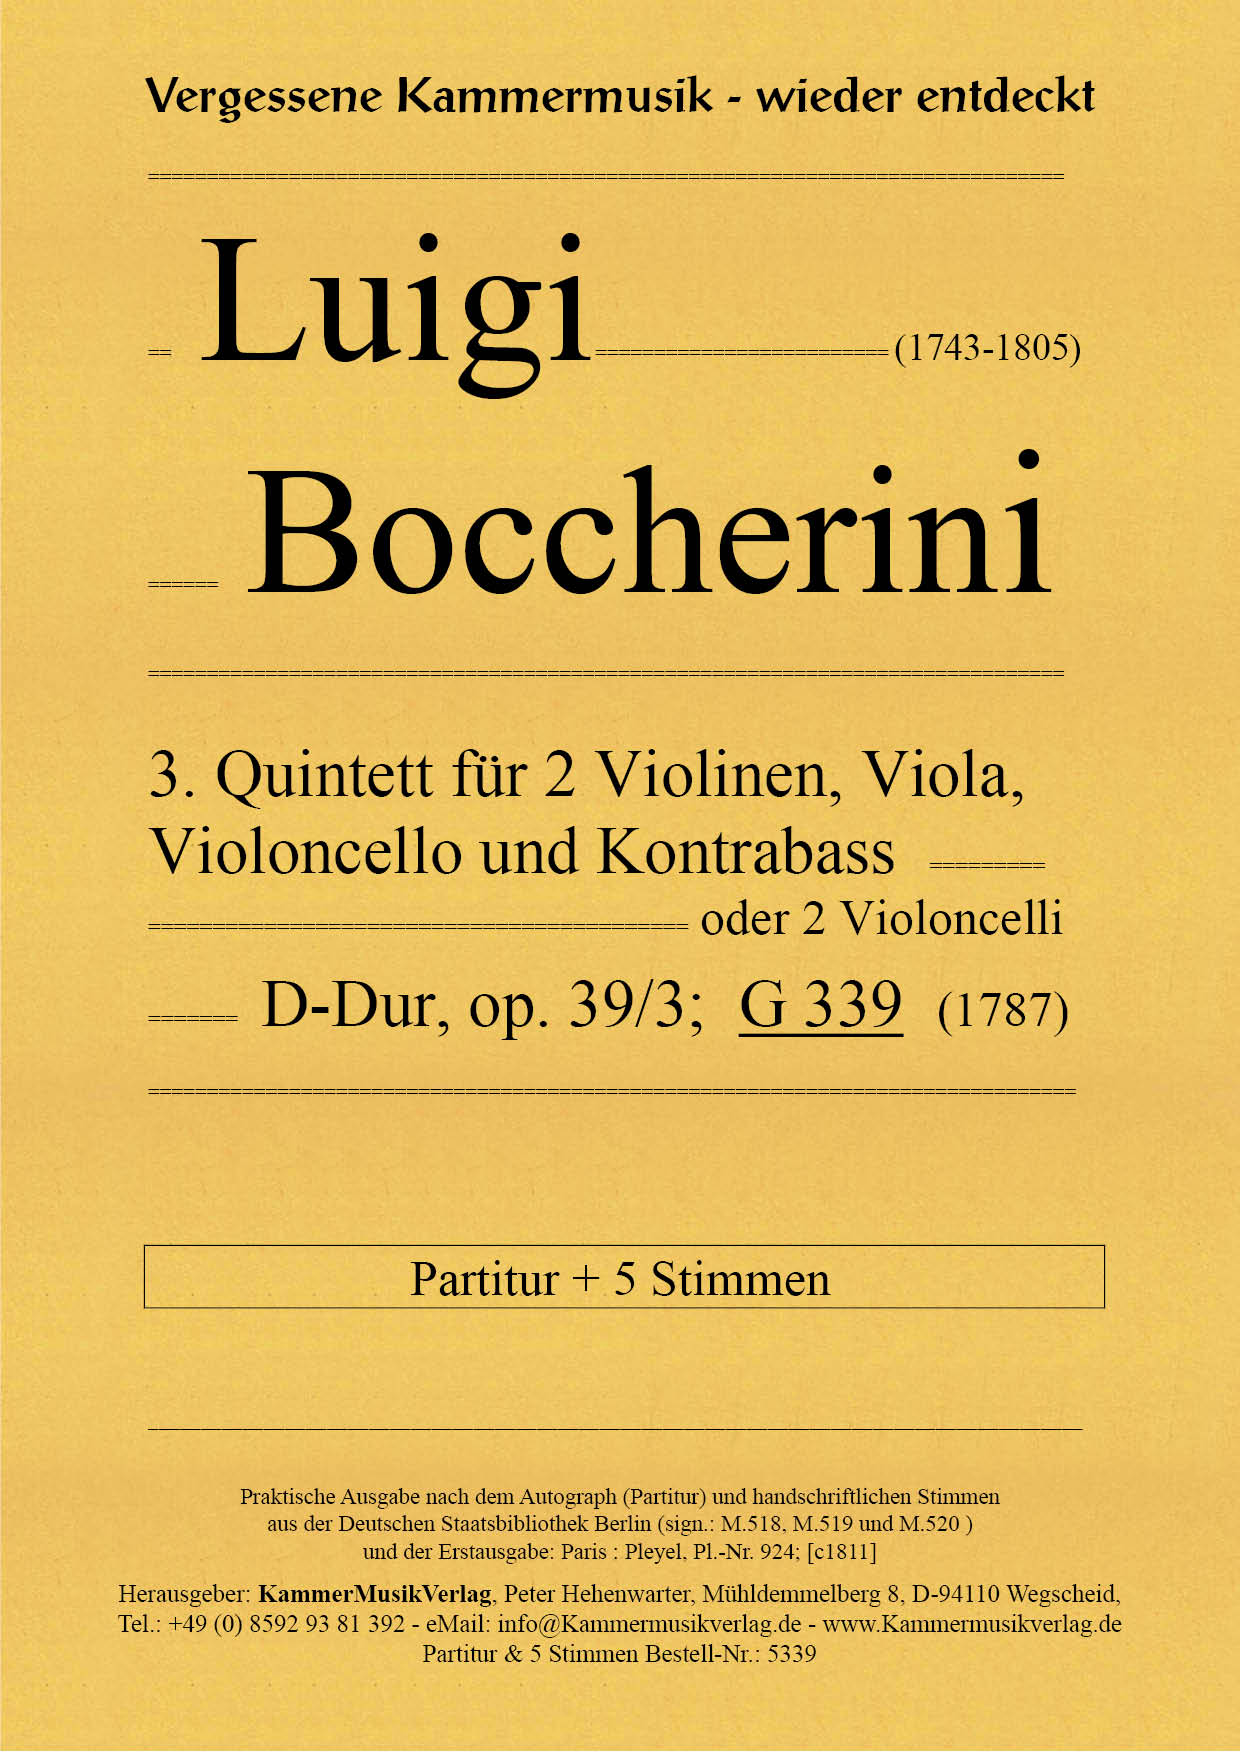 Boccherini: String Quintet No. 3 in D Major, G 339, Op. 39, No. 3